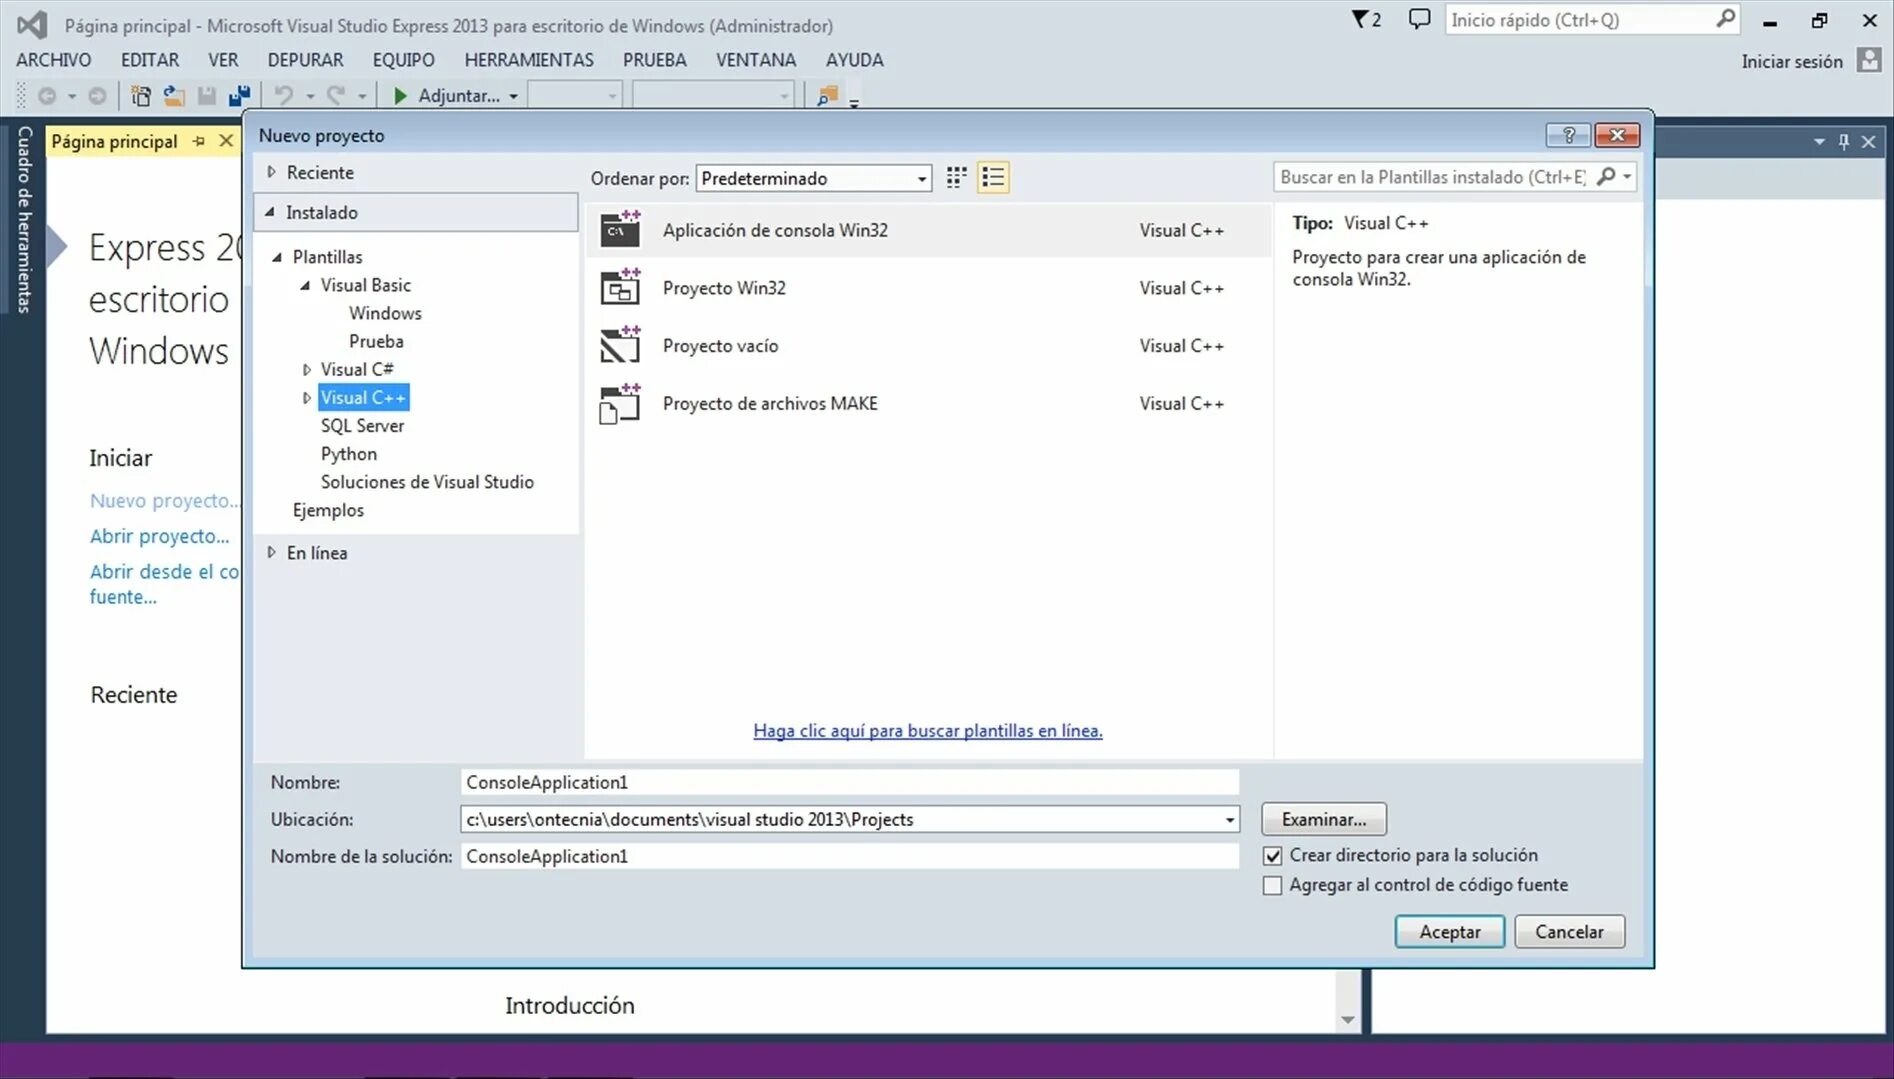 Библиотеки visual c 64. Среда разработки c++ Visual Studio. Visual Studio 2013. Библиотеки Visual c++. Microsoft Visual Studio 2013.